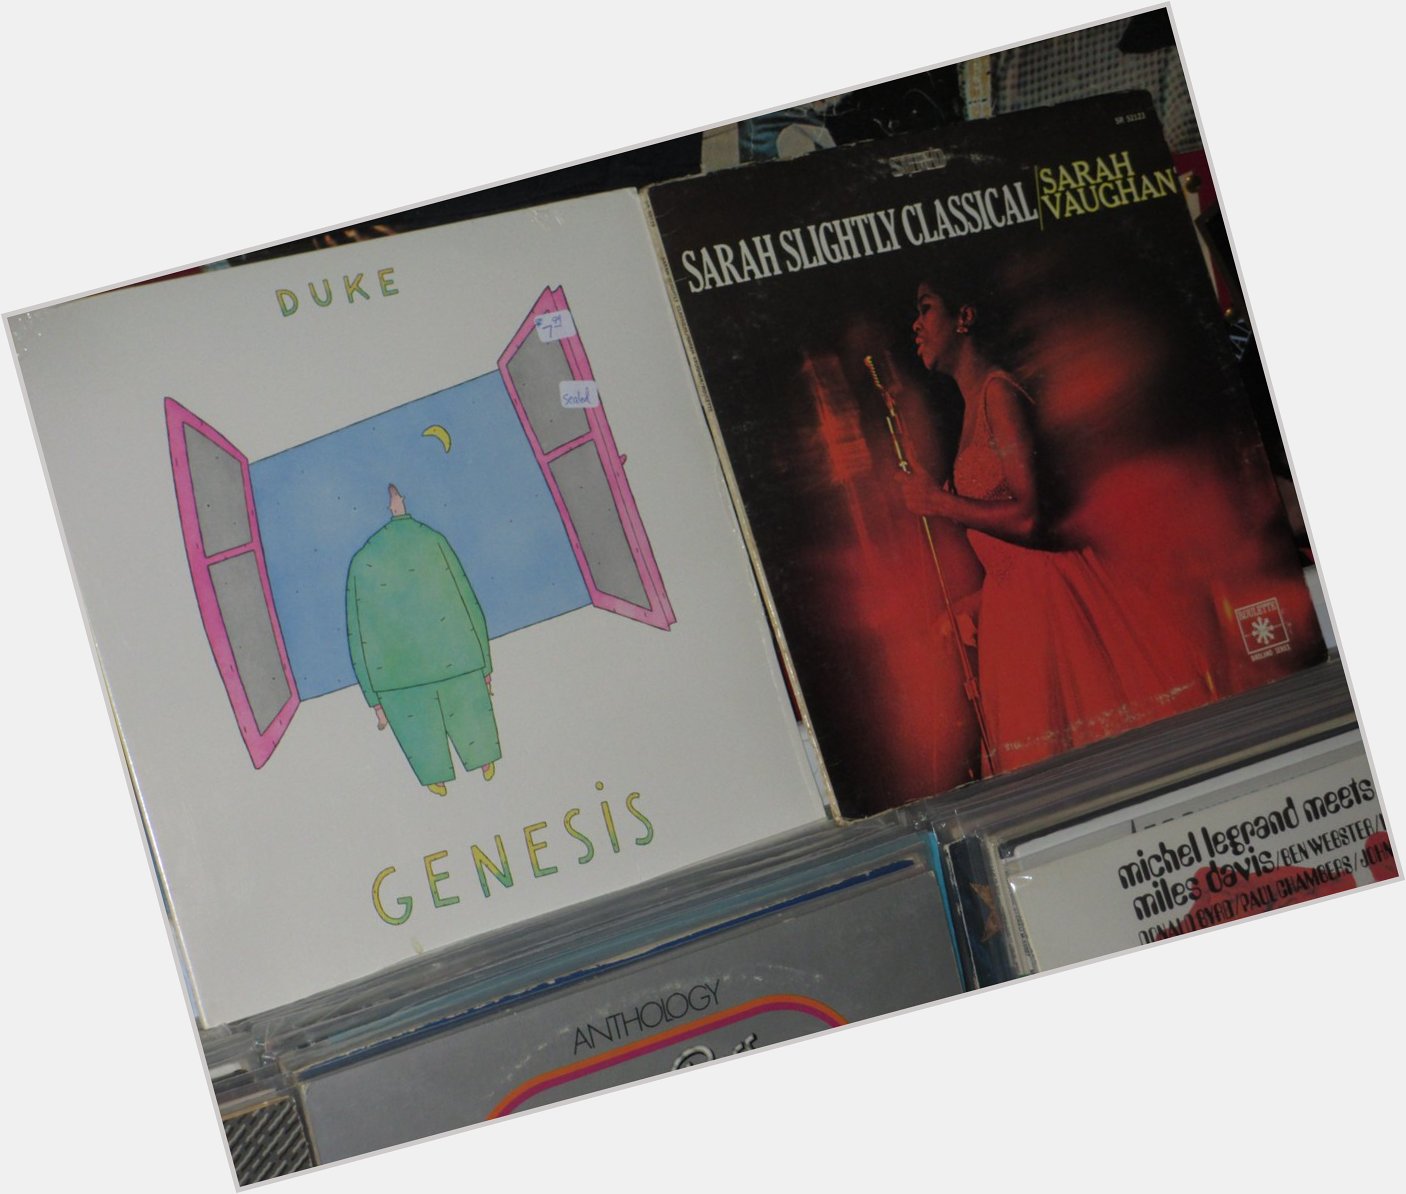 Happy Birthday to Tony Banks of Genesis & the late Sarah Vaughan 